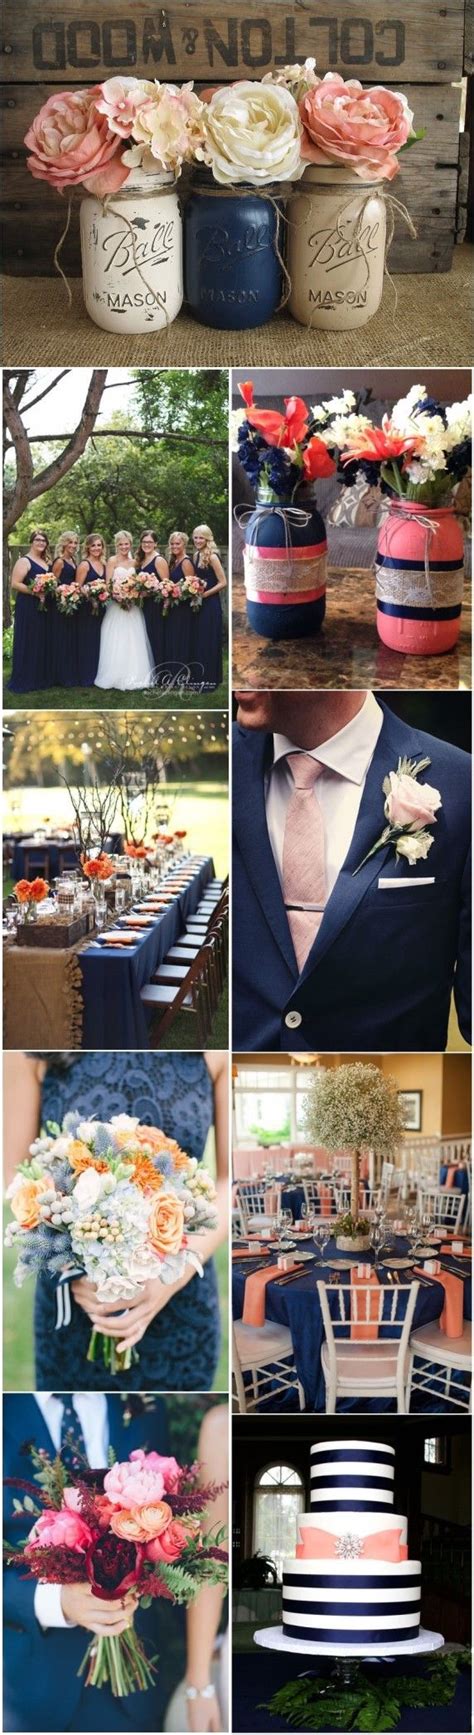 Wedding Ideas 18 Peach And Navy Blue Inspired Wedding Ideas ️ See